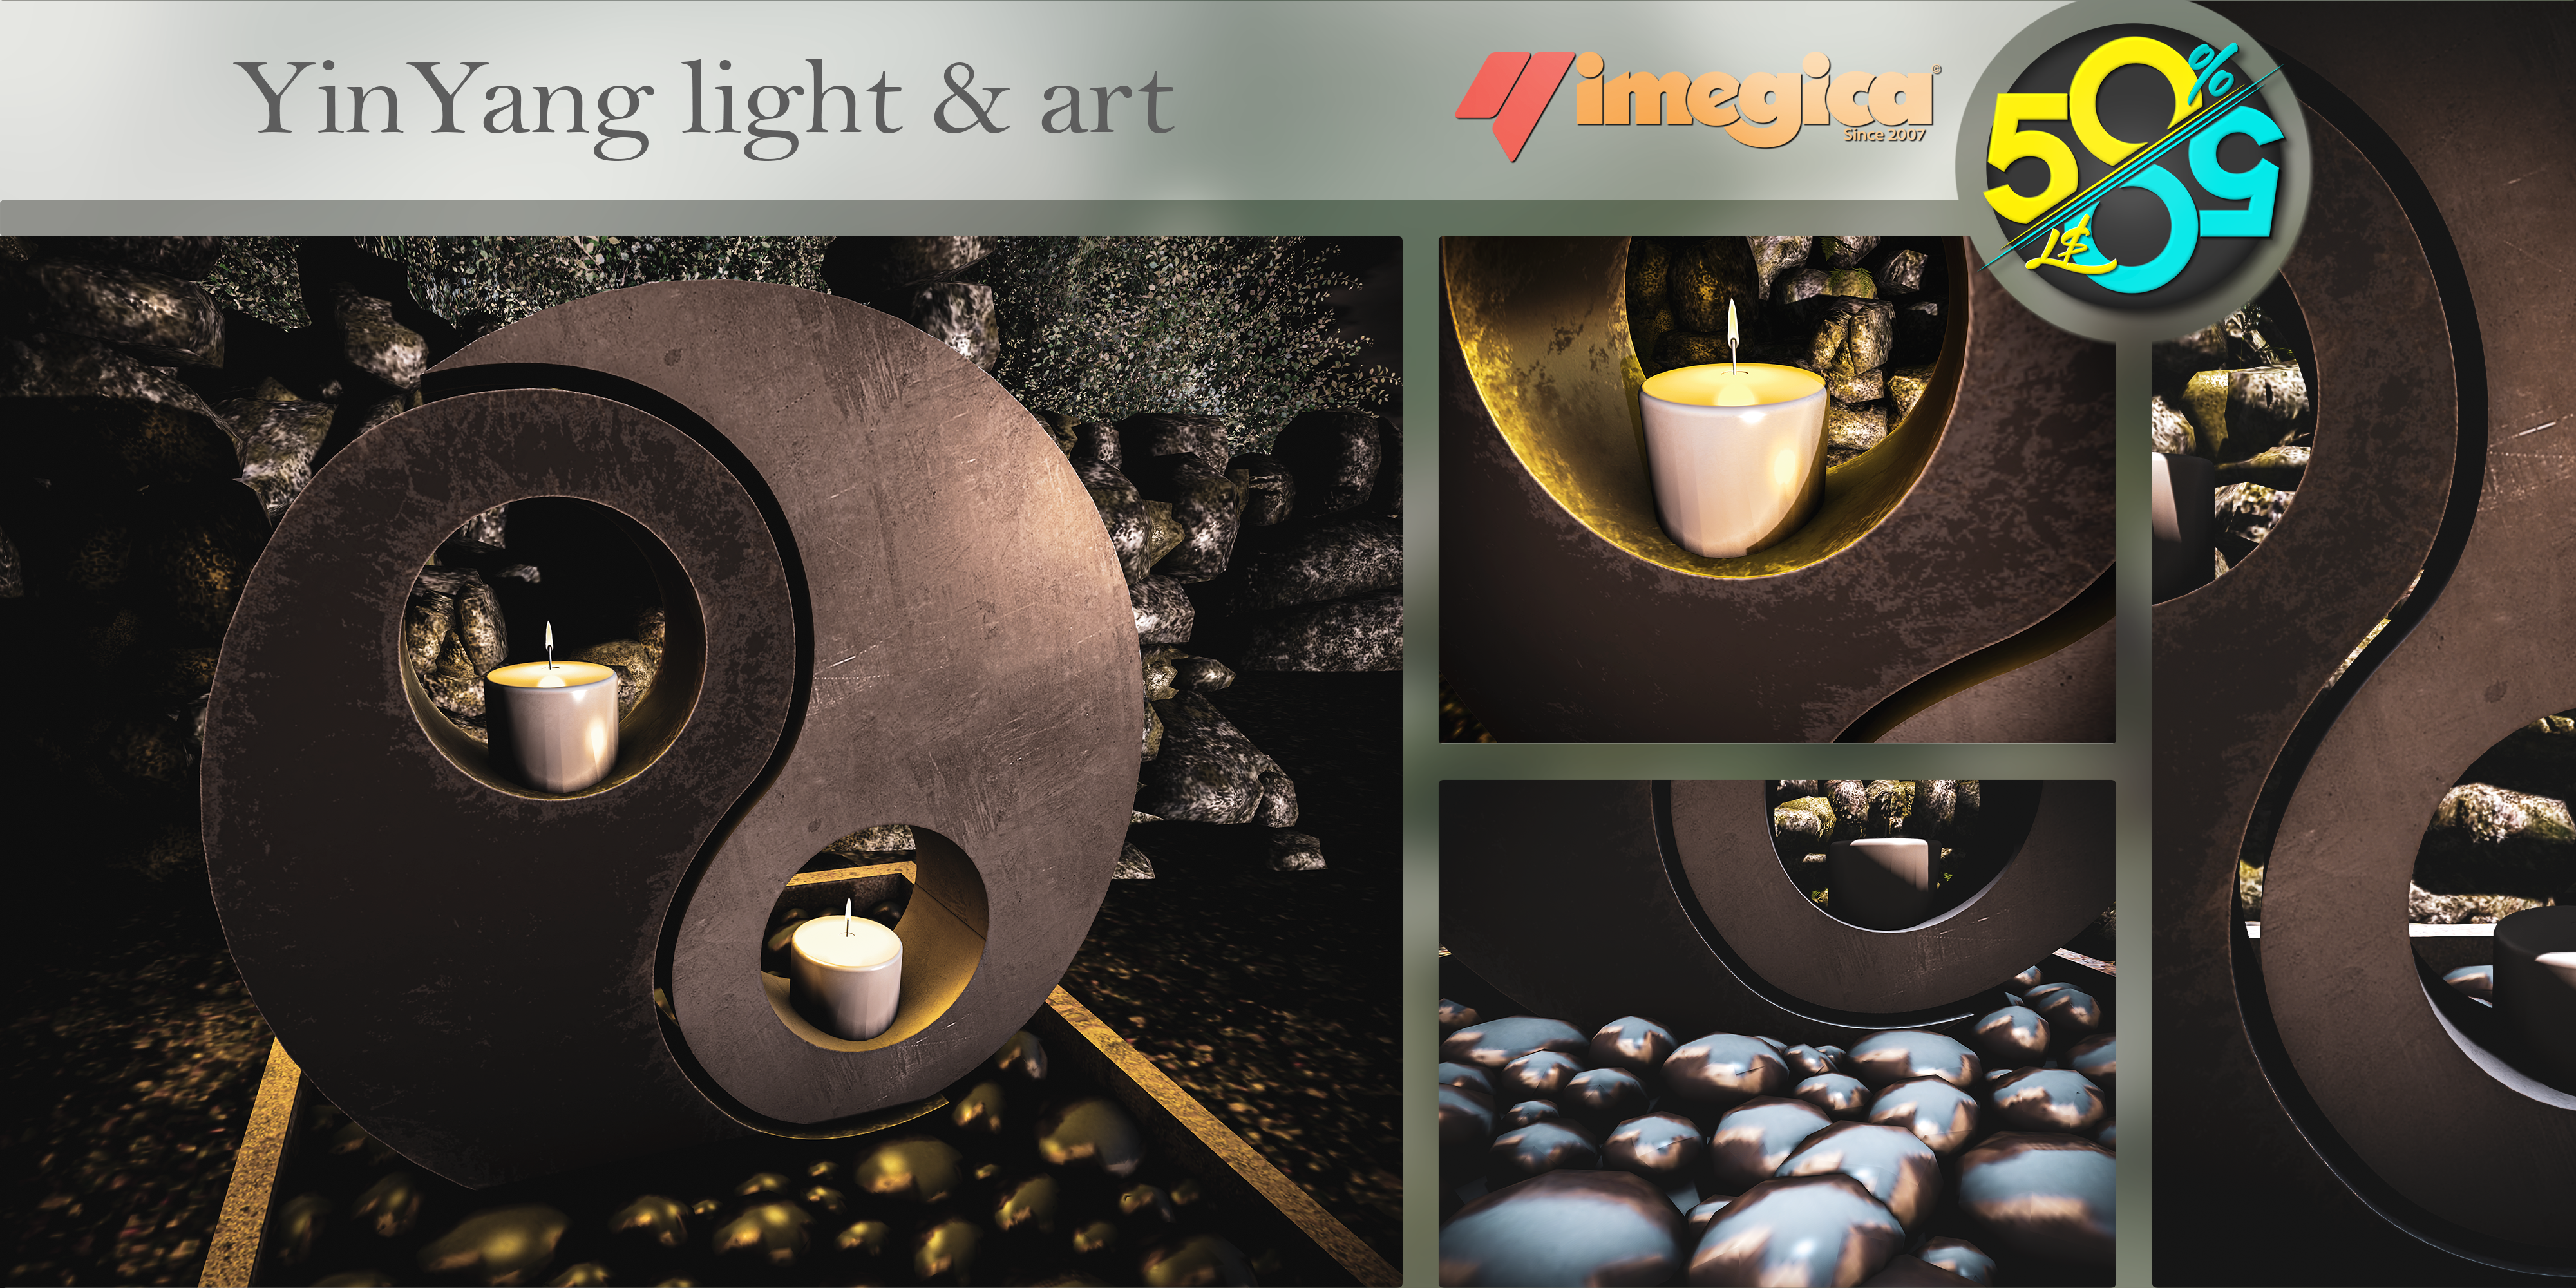 Imegica – YinYang Light & Art